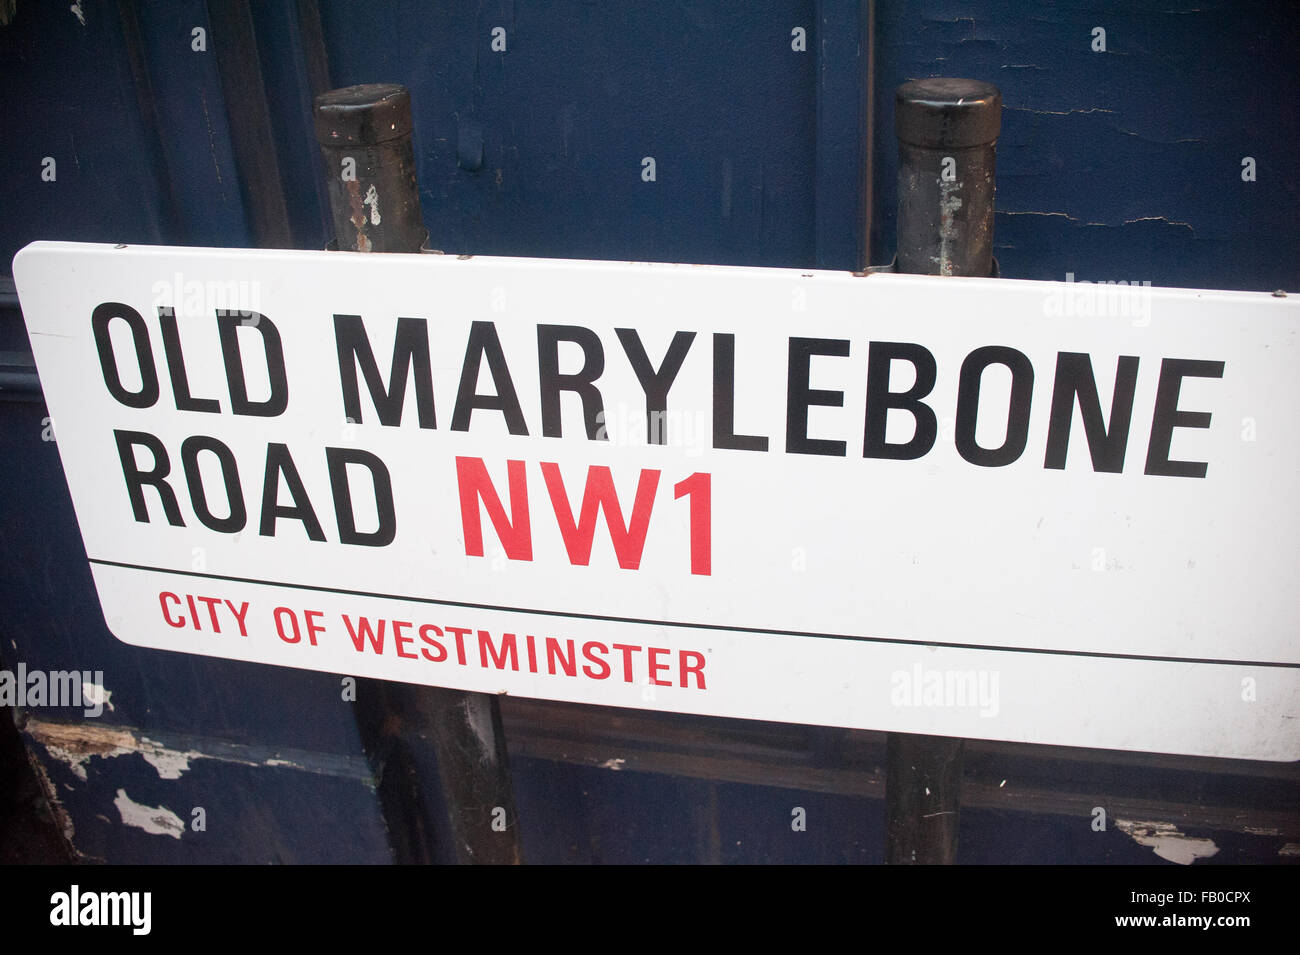 Alten Marylebone Road NW1 Straße anmelden, City of Westminster, London. Stockfoto